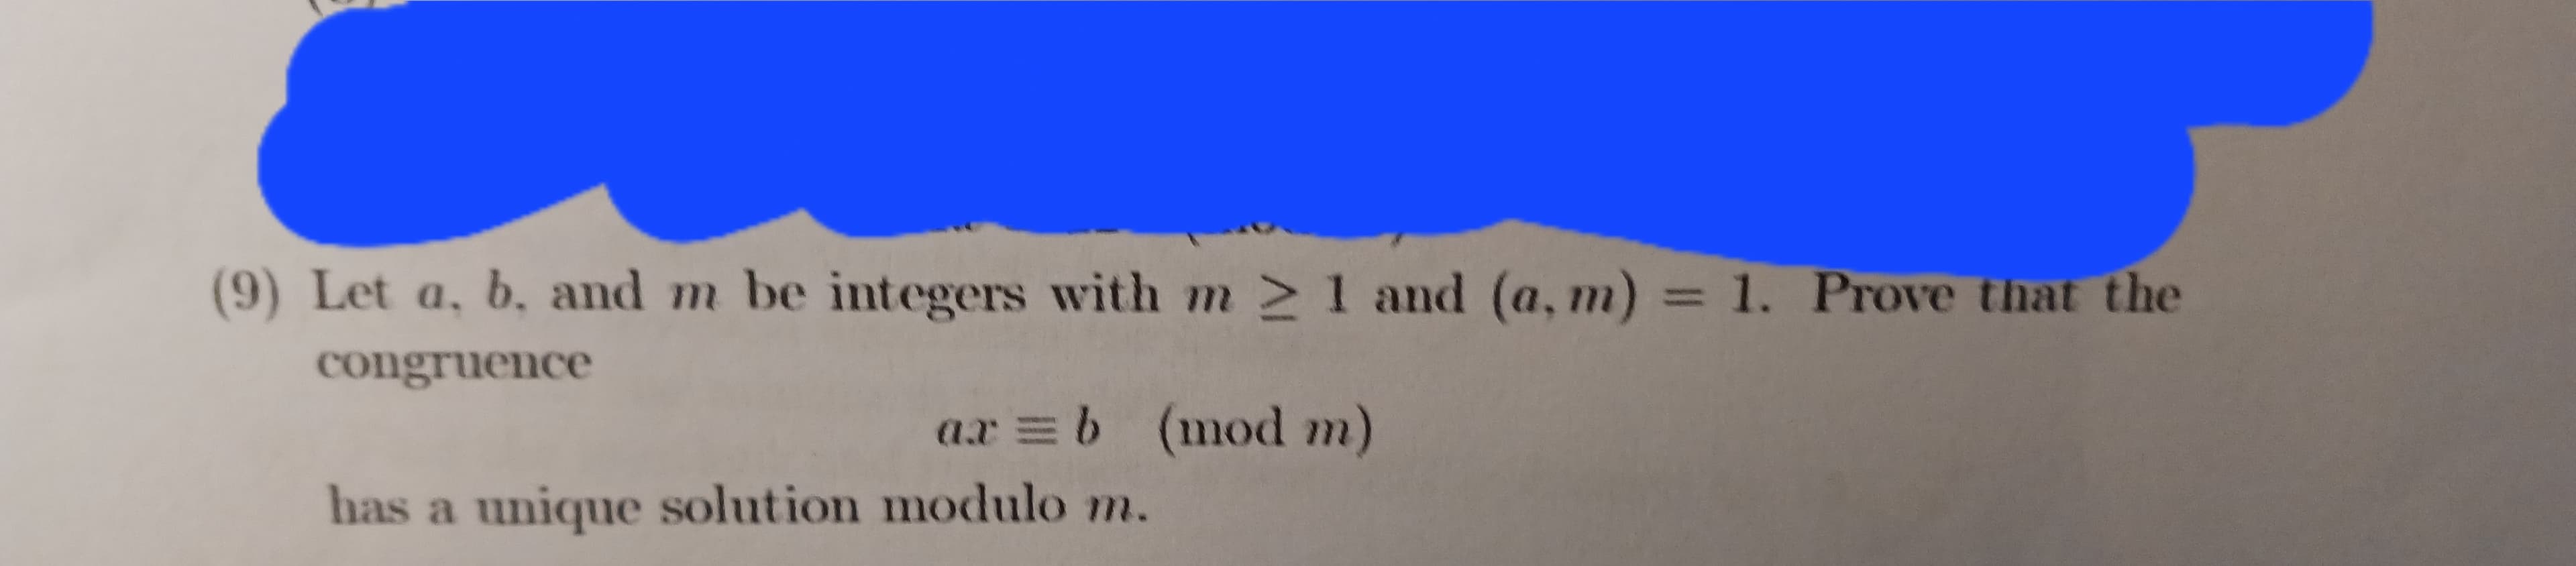 (9) Let a, b, and m be integers with m 21 and (a,m) = 1. Prove that the
congruence
ax=b (mod m)
has a unique solution modulo m.